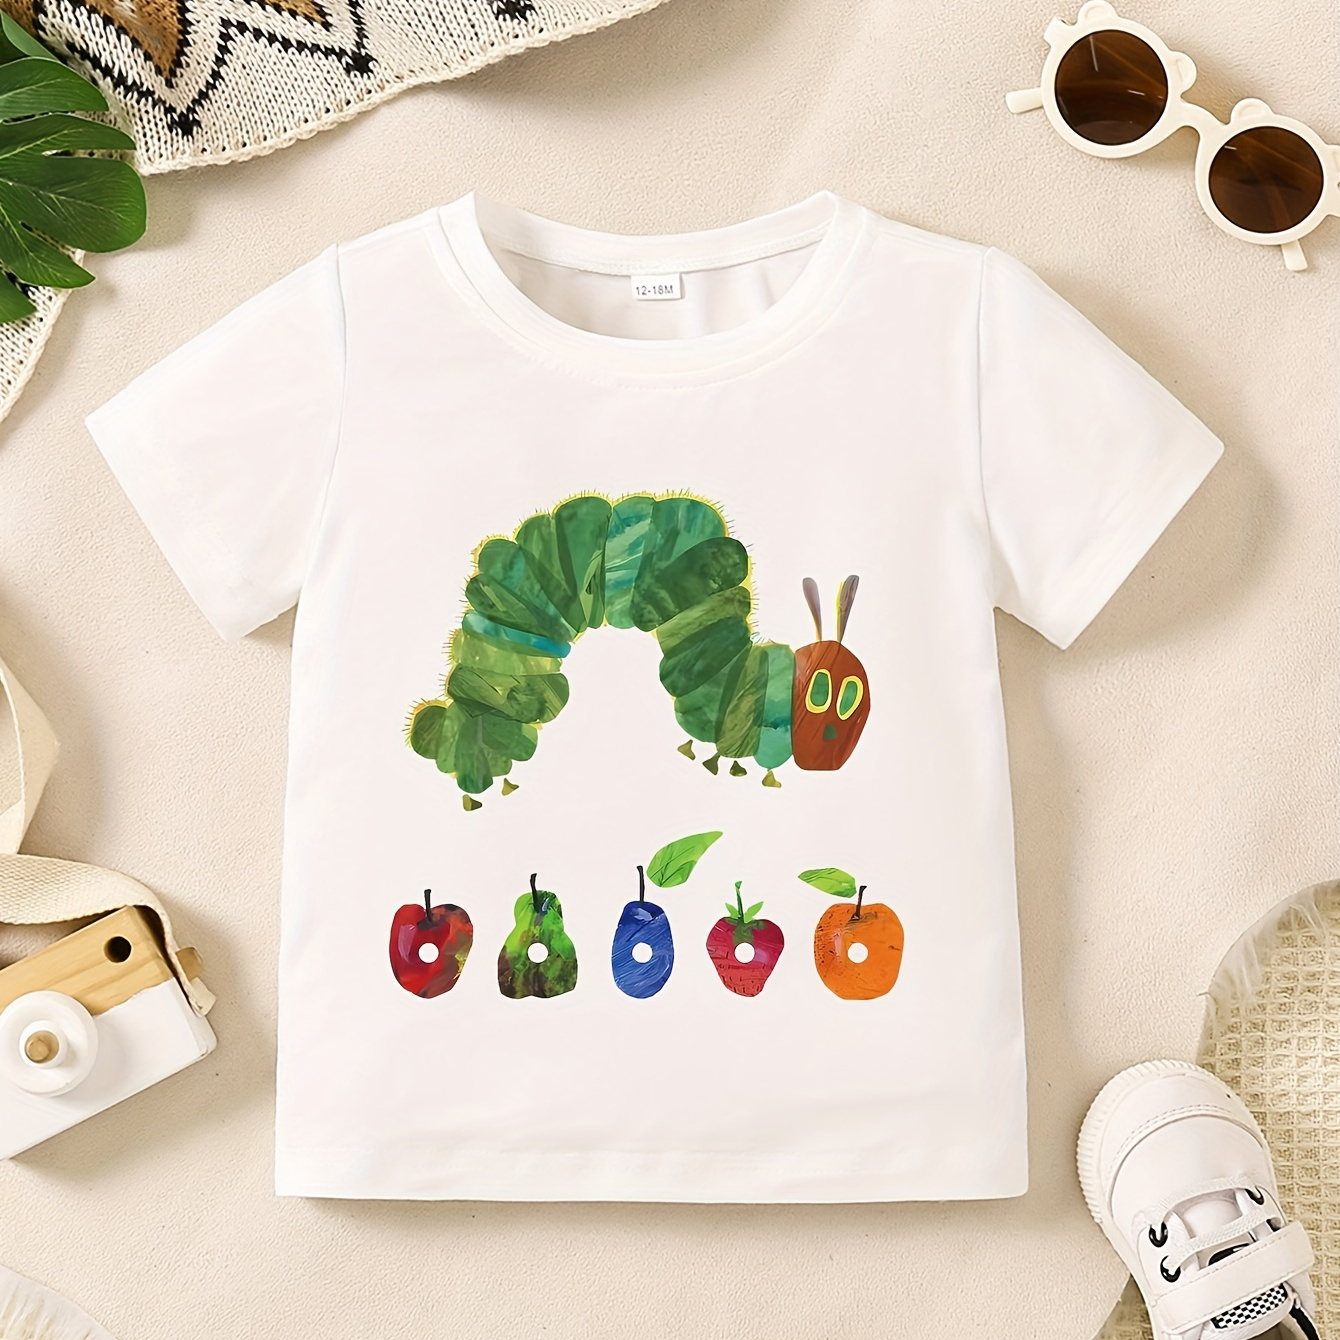 

Baby Boy's Summer Casual Short Sleeve T-shirt - Cartoon Caterpillar And Fruits Print Cool Comfy Crew Neck Tee Gift